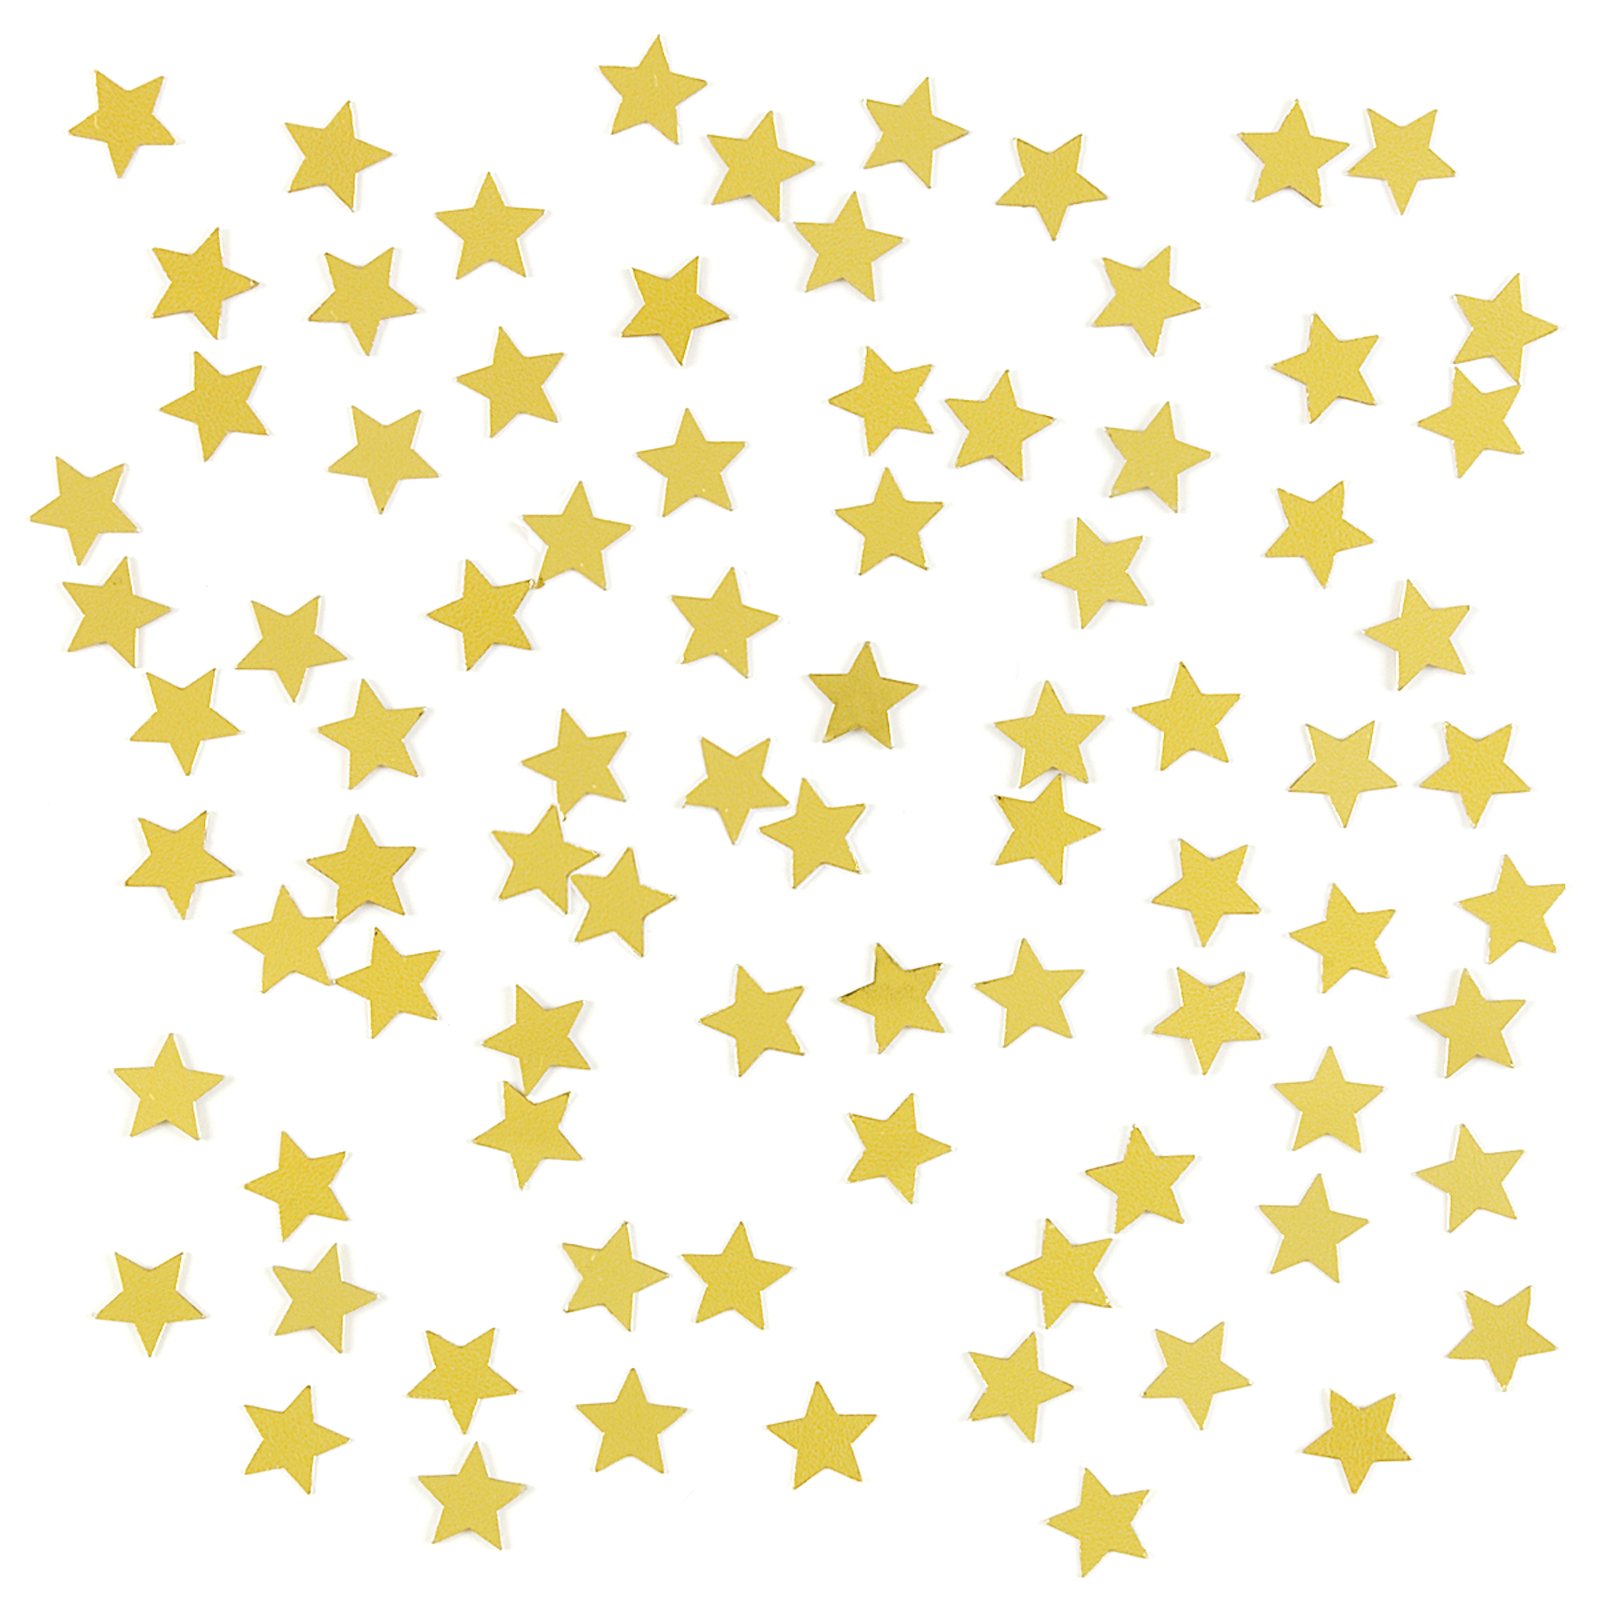 Formative Assessment Espiral 2013 - Gold Stars